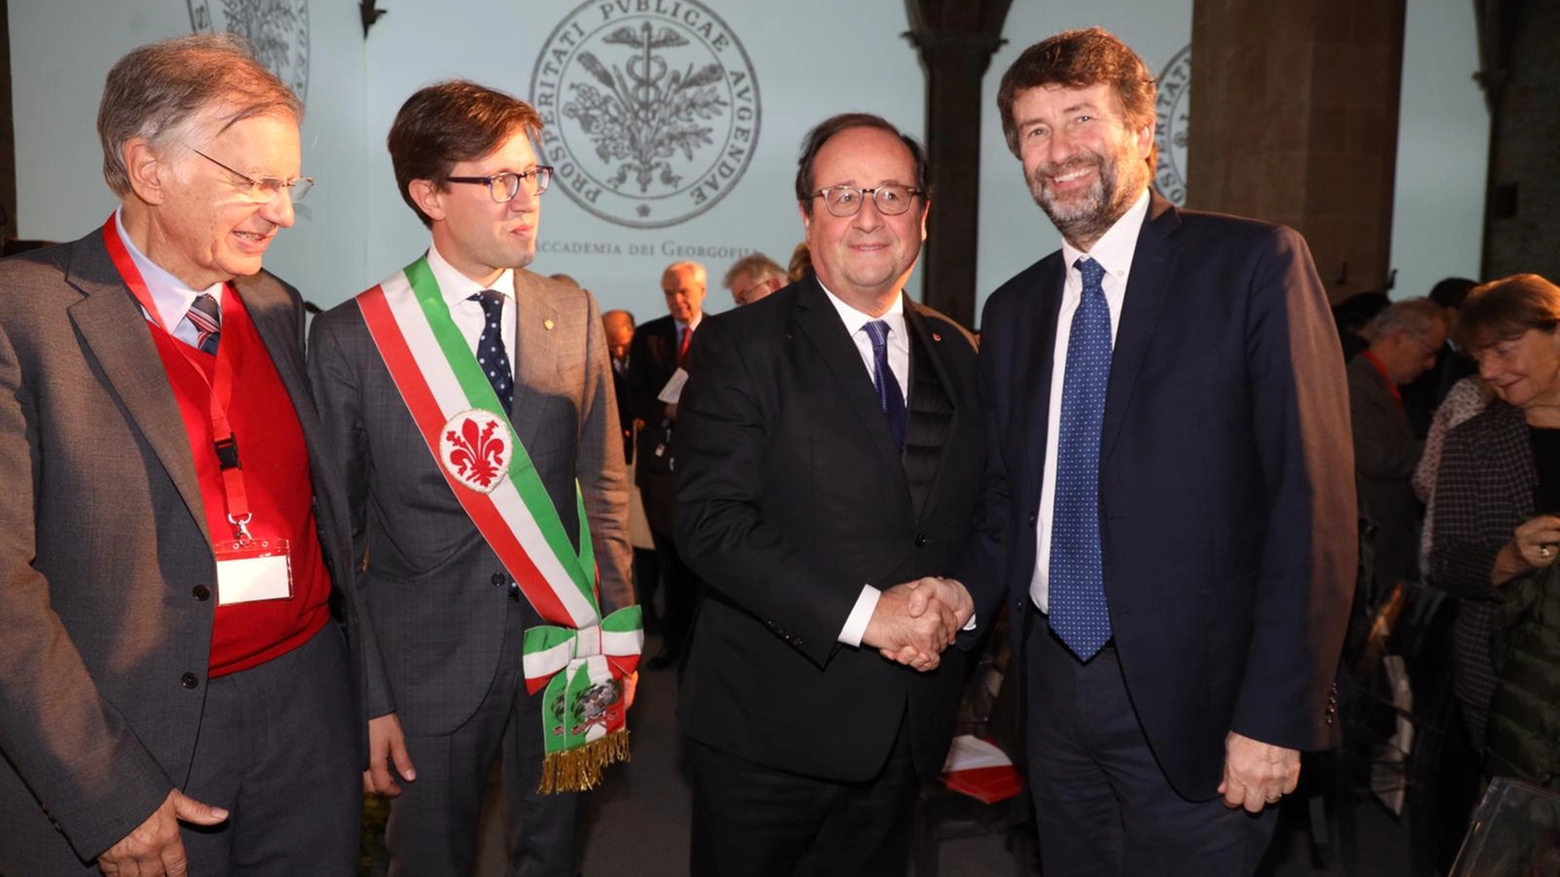 Valdo Spini, Dario Nardella, François Hollande e Dario Franceschini (foto New Pressphoto)